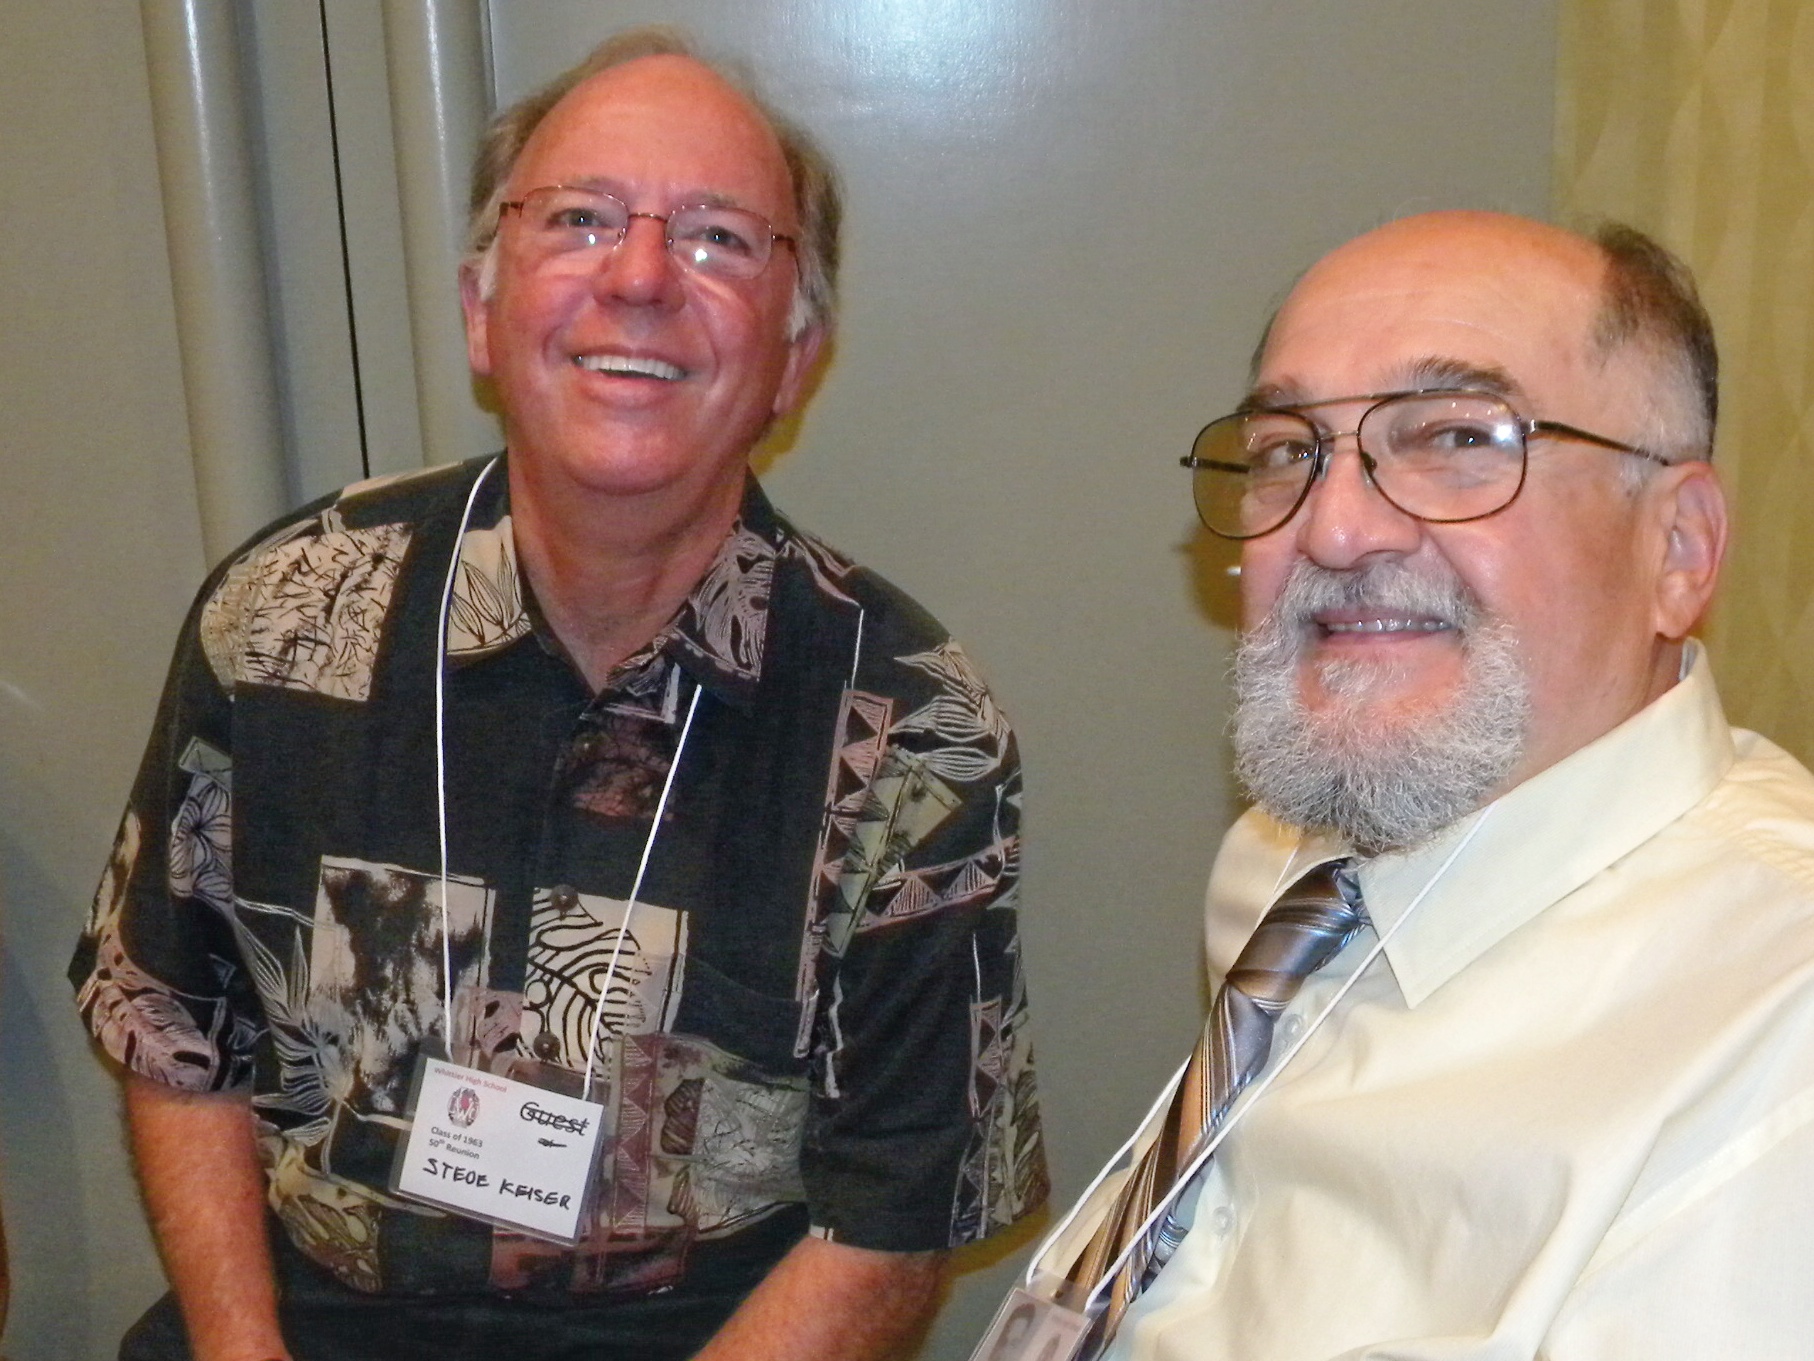 Steve Keiser and Bob Amezquita.